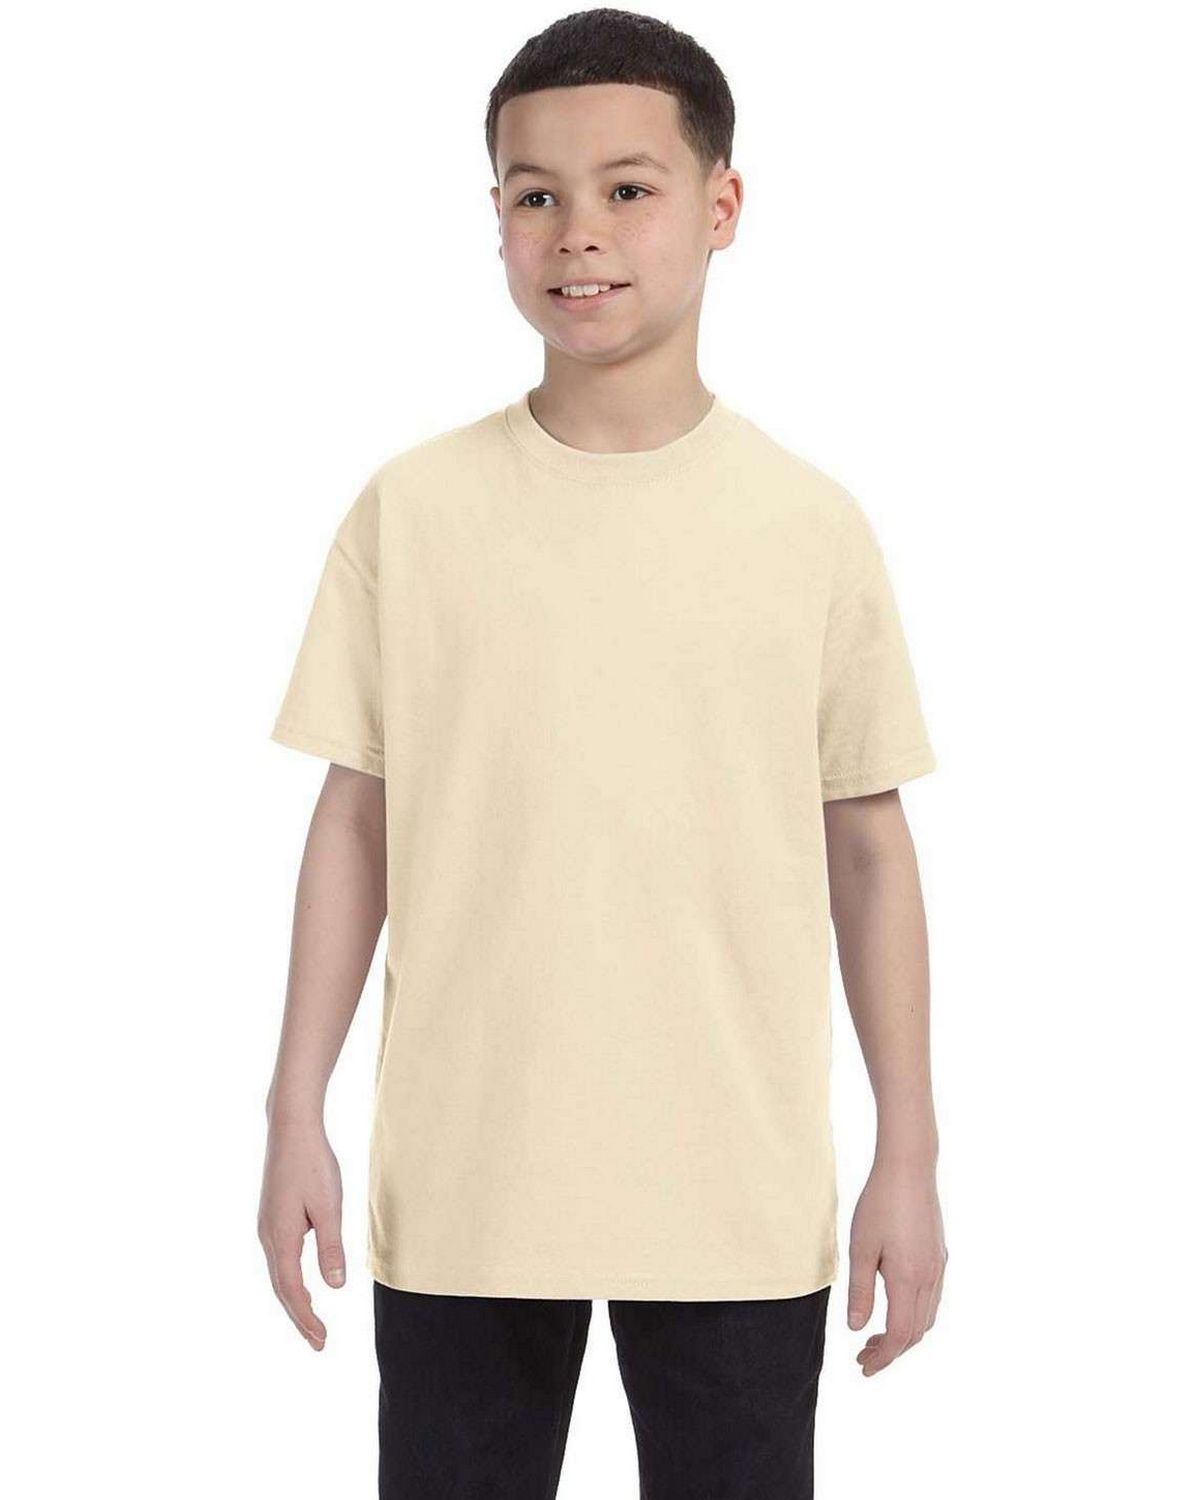 GILDAN Heavy Cotton Tee Youth T-Shirt Kids Short Sleeve Teeshirt Casual T Top